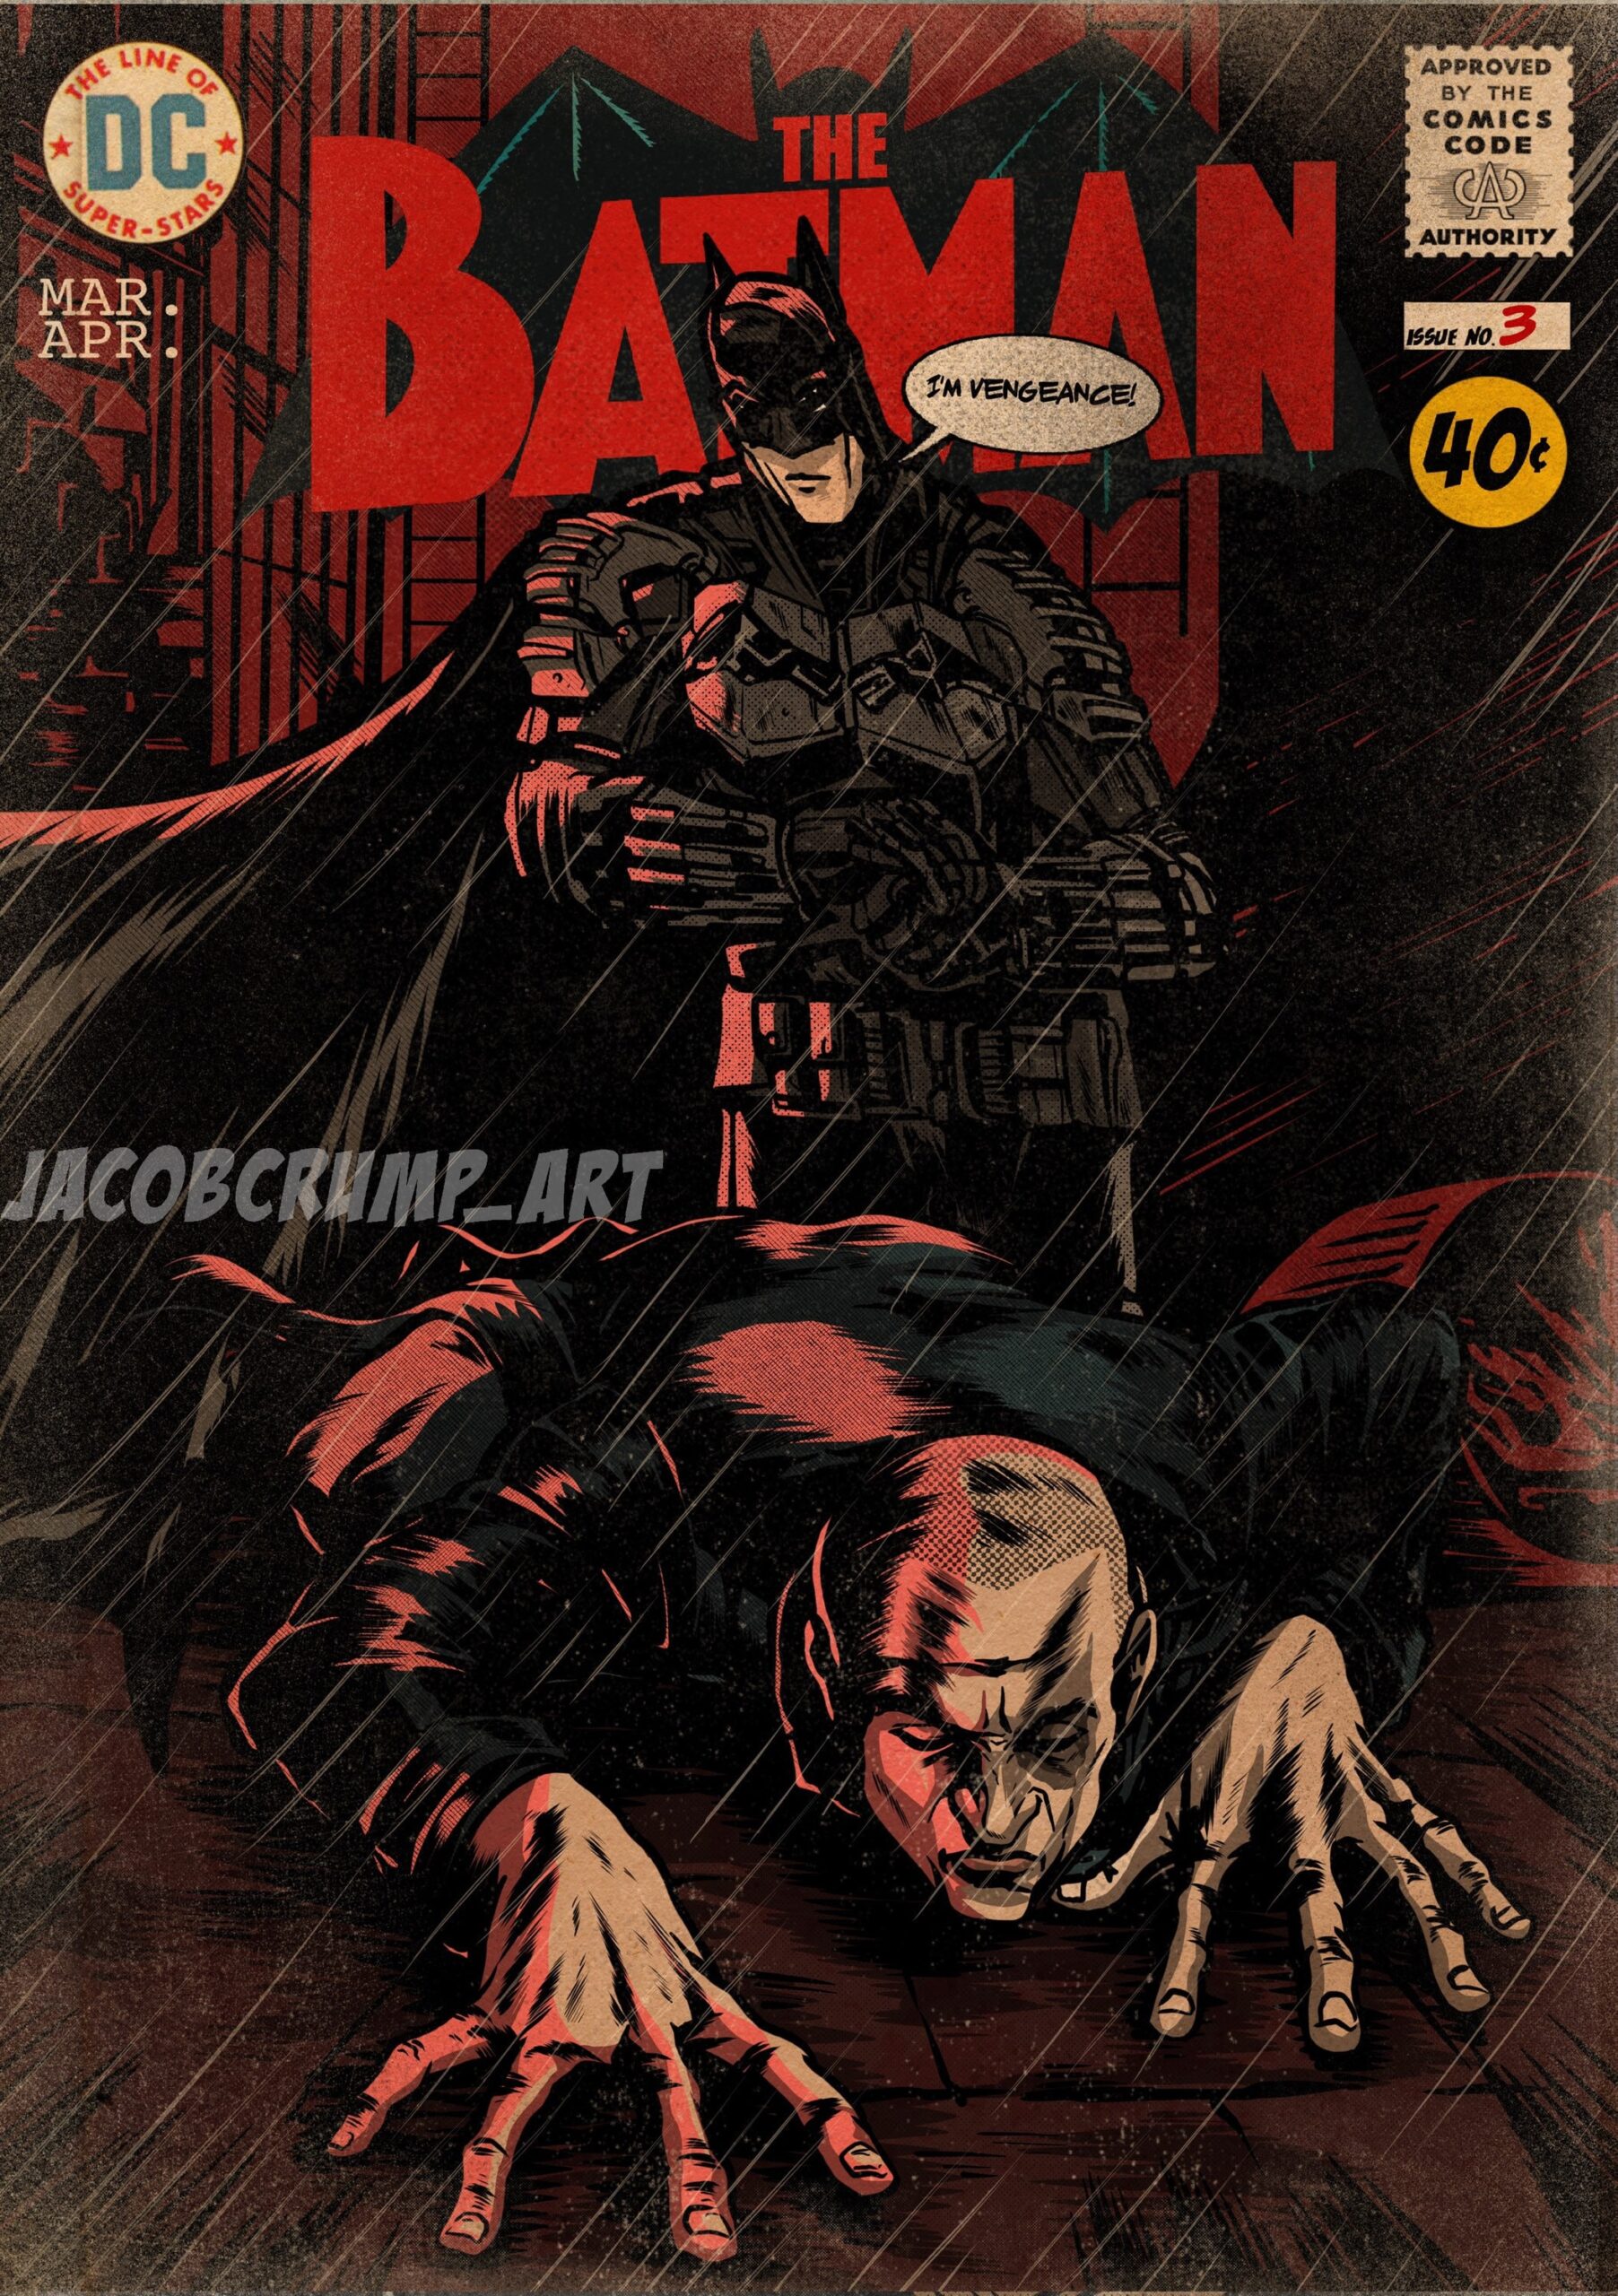 batman beyond movie poster 2022